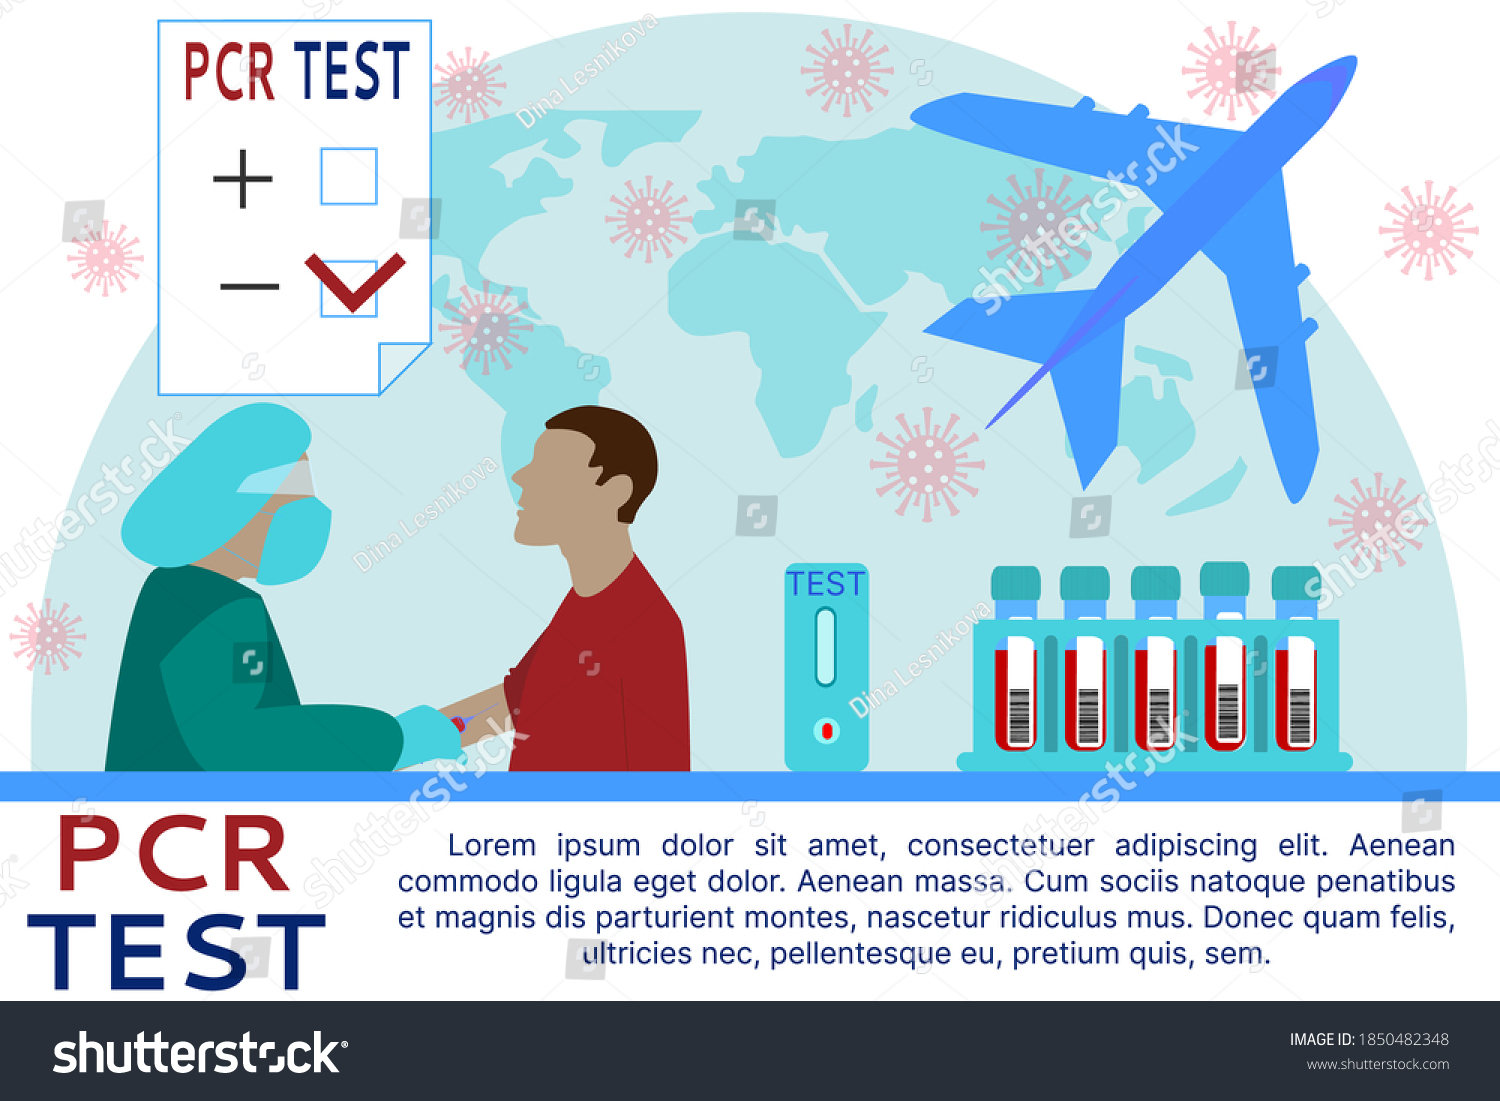 Pcr Test Coronavirus Flights Plane Travel Stock Vector Royalty Free